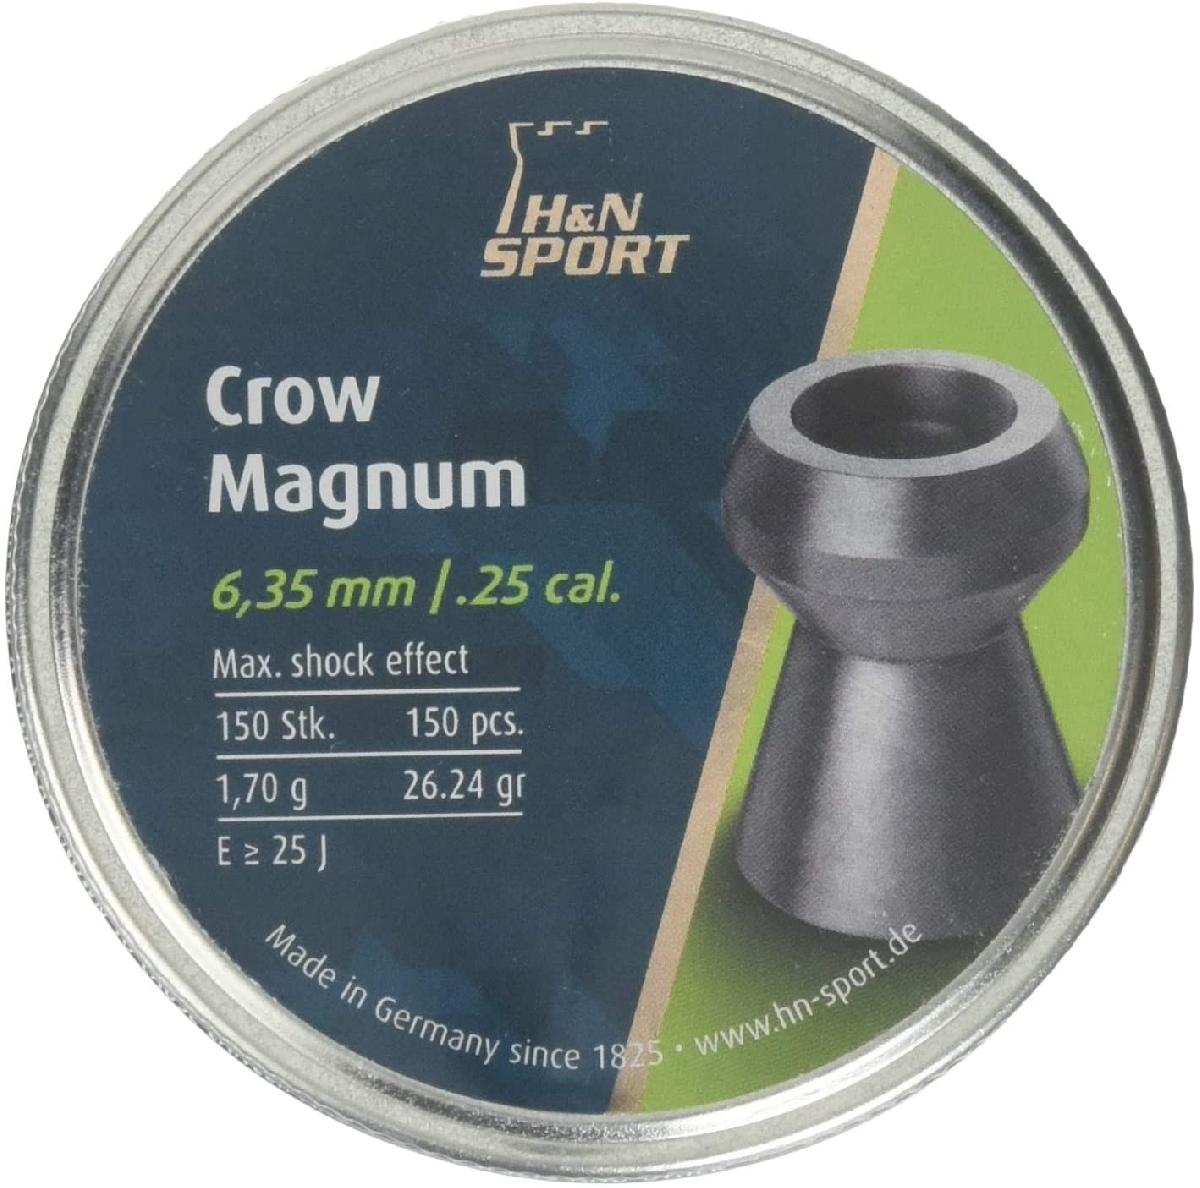 Crow Magnum 6,35mm .25 / 150 stuks-1514-a